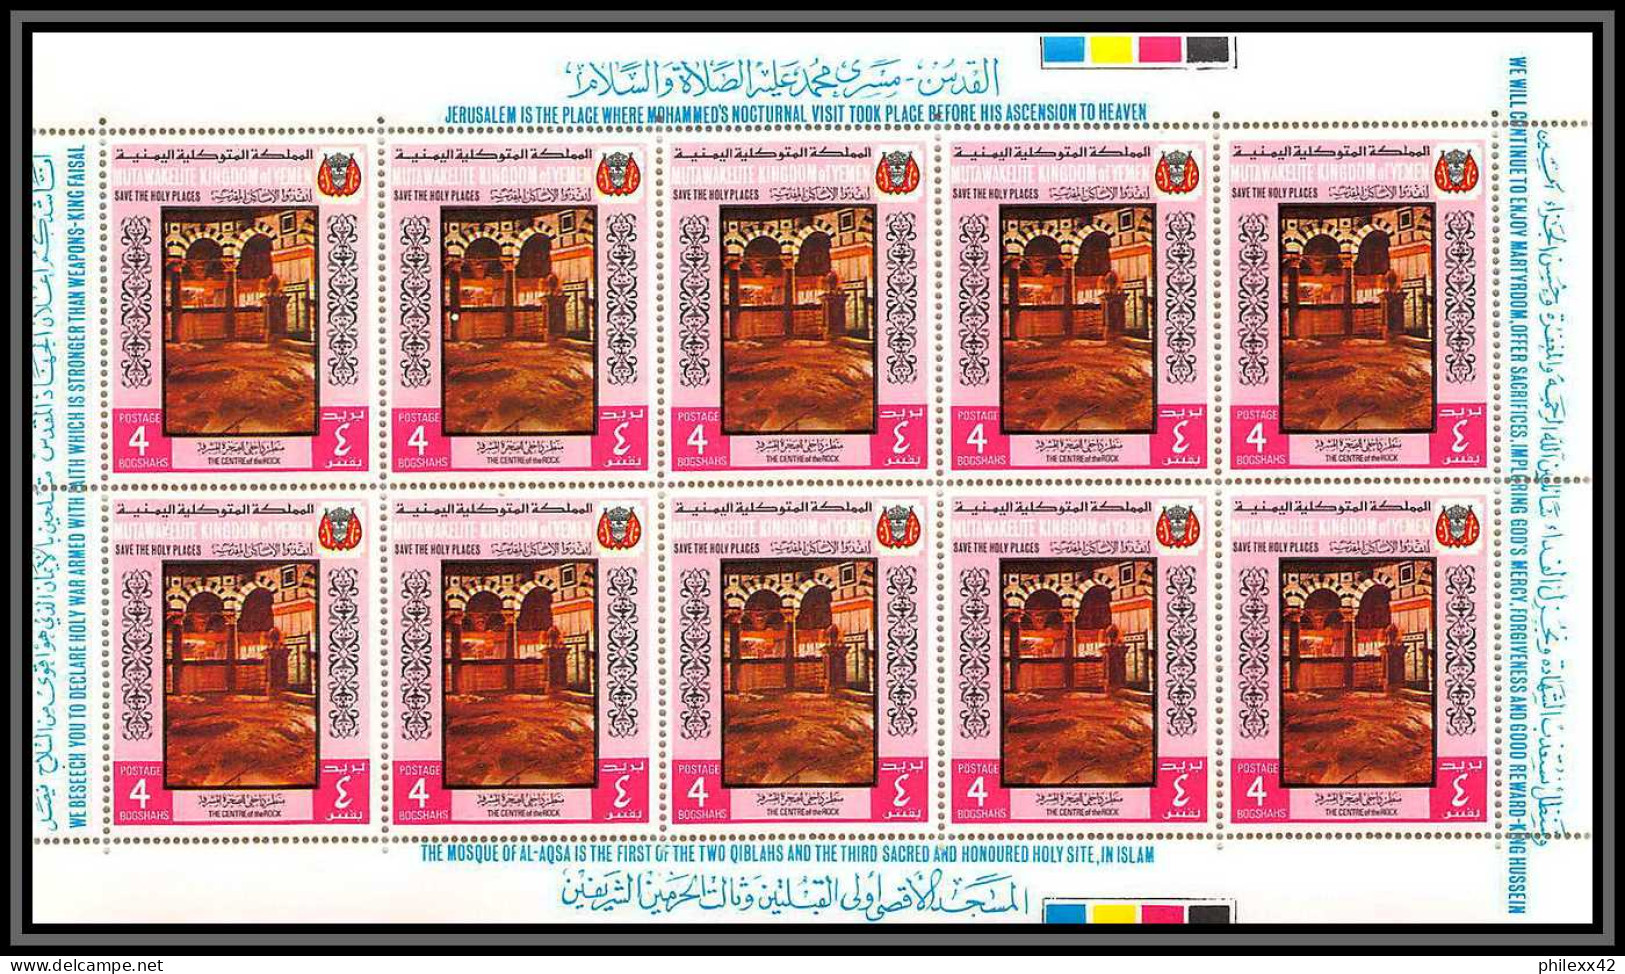 Yemen royaume (kingdom) - 4144b N°810/815 A lieux saints holy sites jerusalem israel Palestine ** mnh feuille sheet